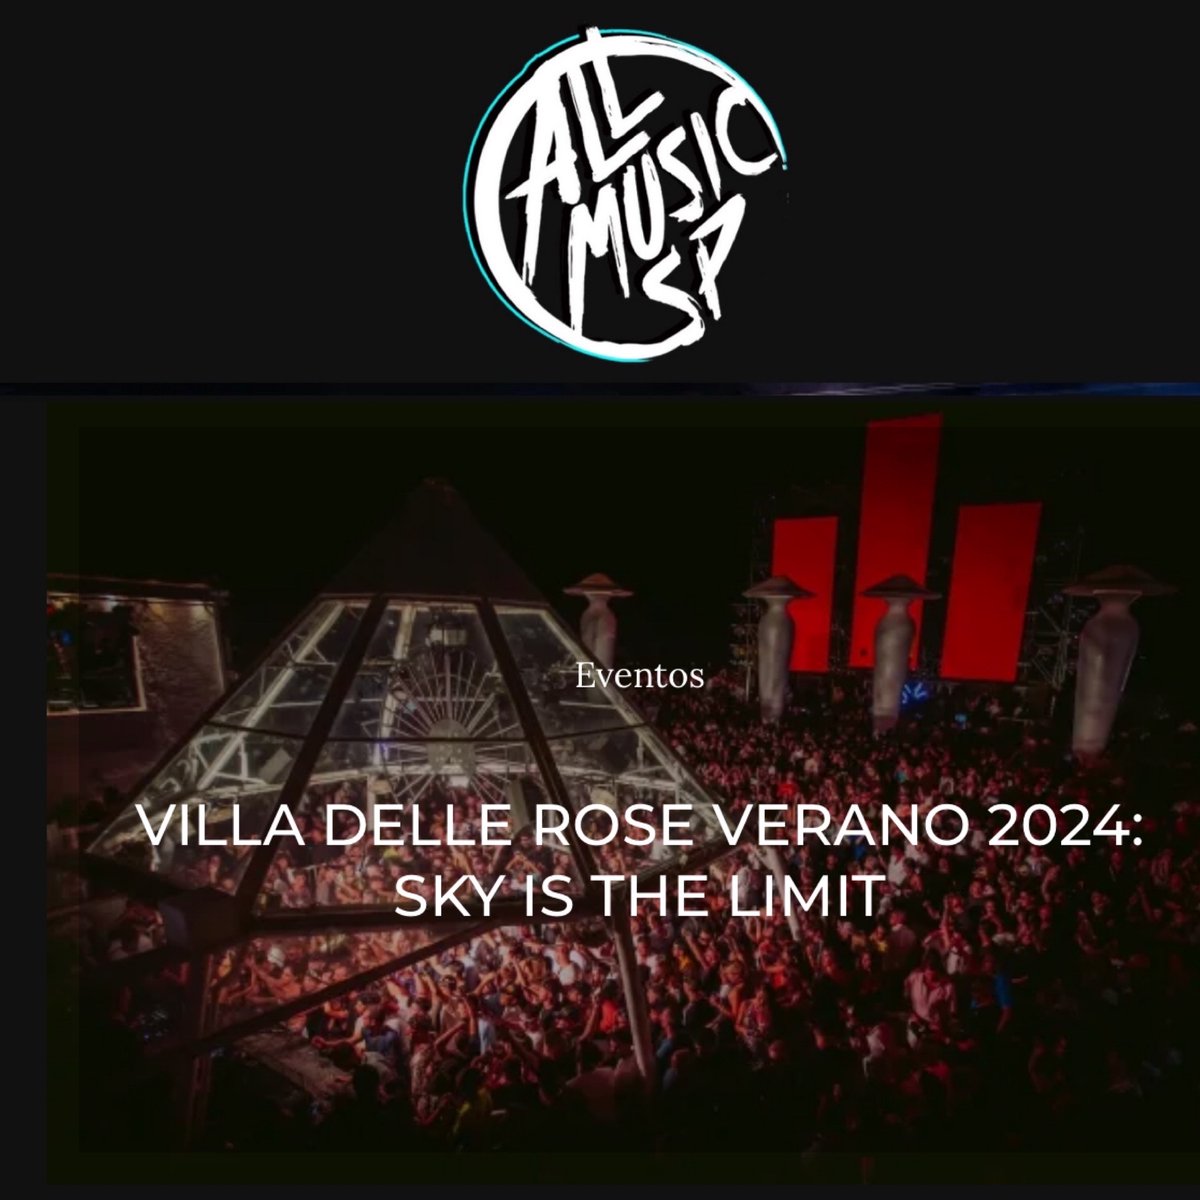 #VilladelleRose #skyisthelimit #rassegnastampa #mtvitalia #ilrestodelcarlino #riminitoday #allmusicspain

mtv.it/news/bib0lf/pr…

ilrestodelcarlino.it/rimini/cronaca…

riminitoday.it/eventi/inaugur…

allmusicspain.com/eventos/villa-…